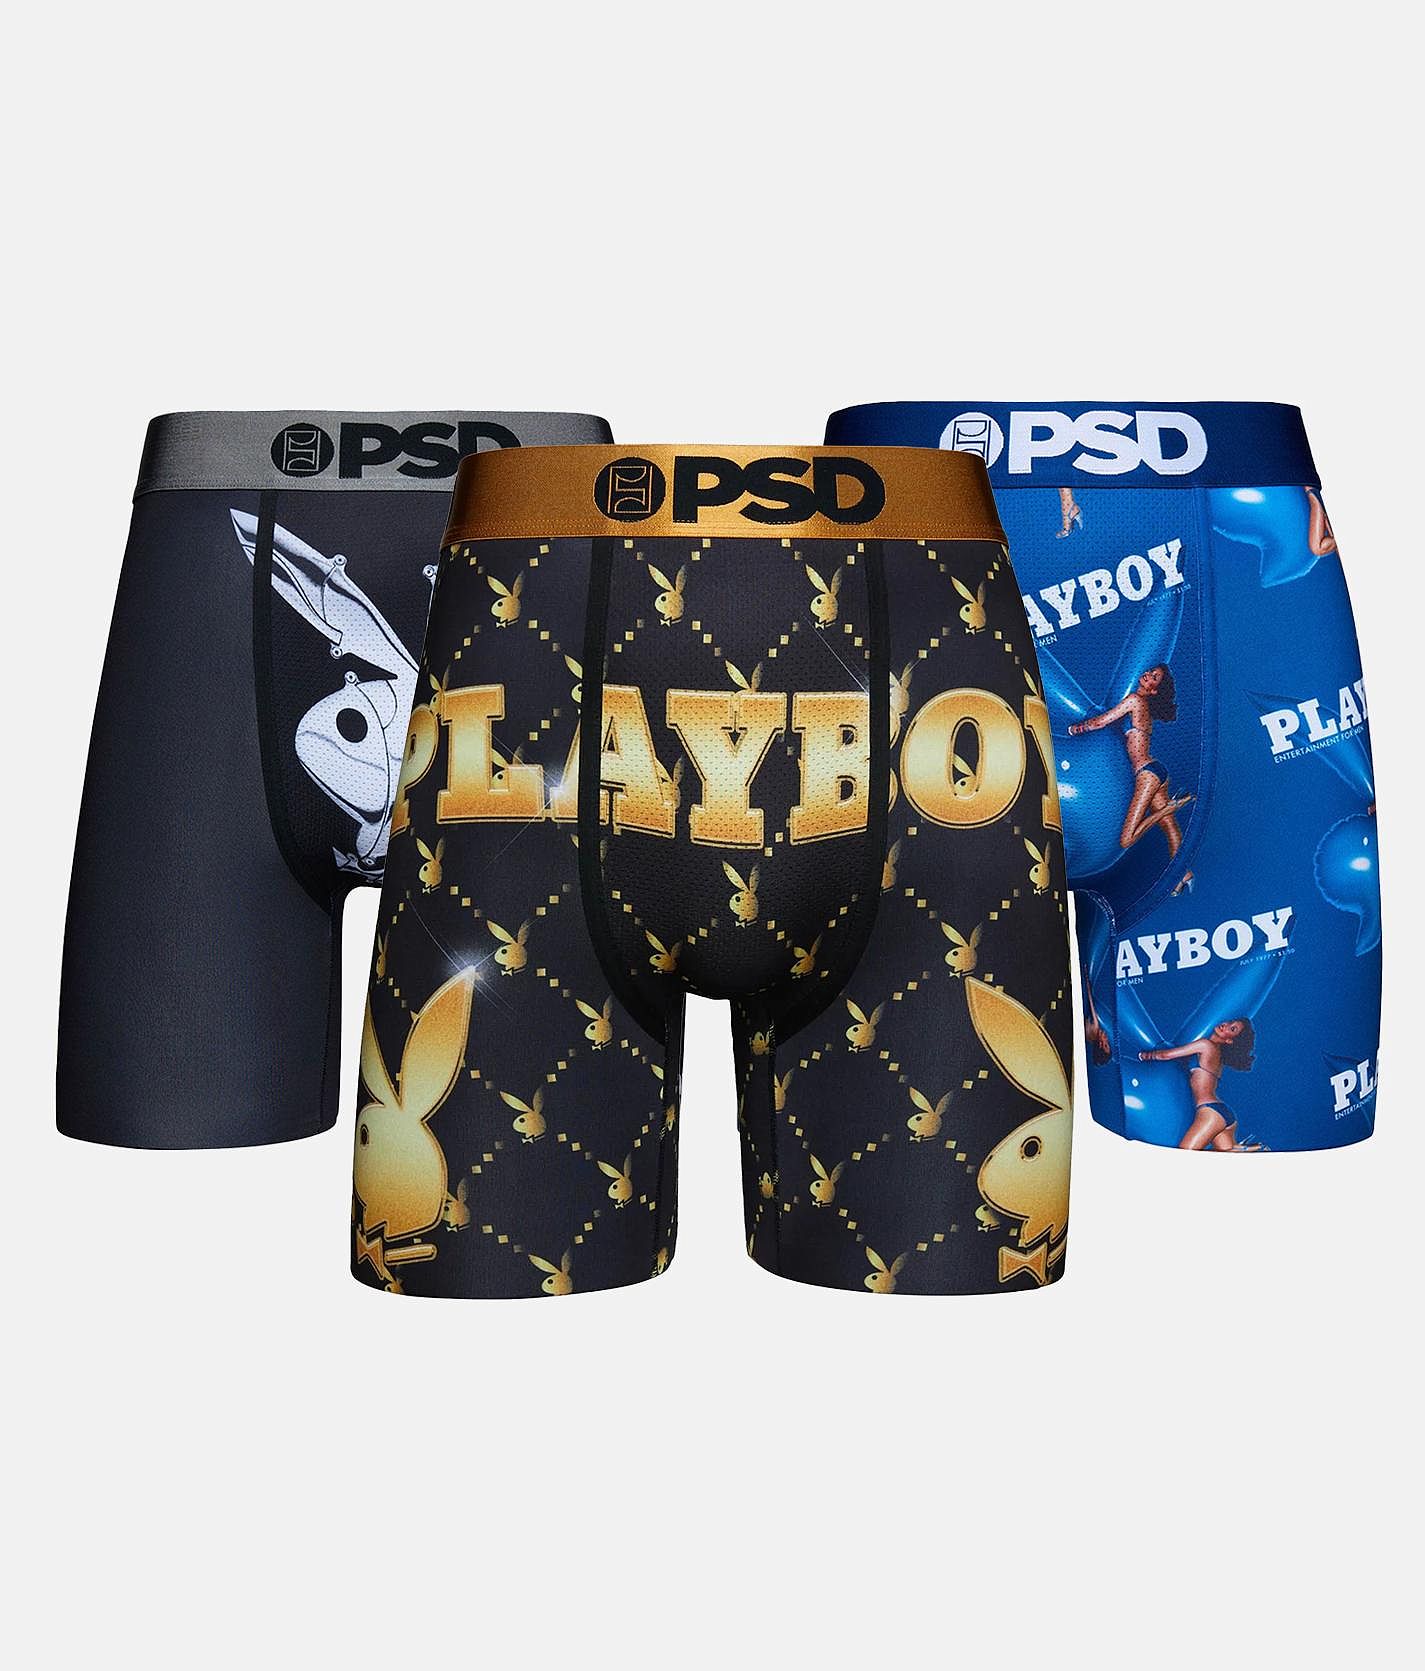 PSD Playboy Beach Club Stretch Boxer Briefs - Men's Boxers in Multi